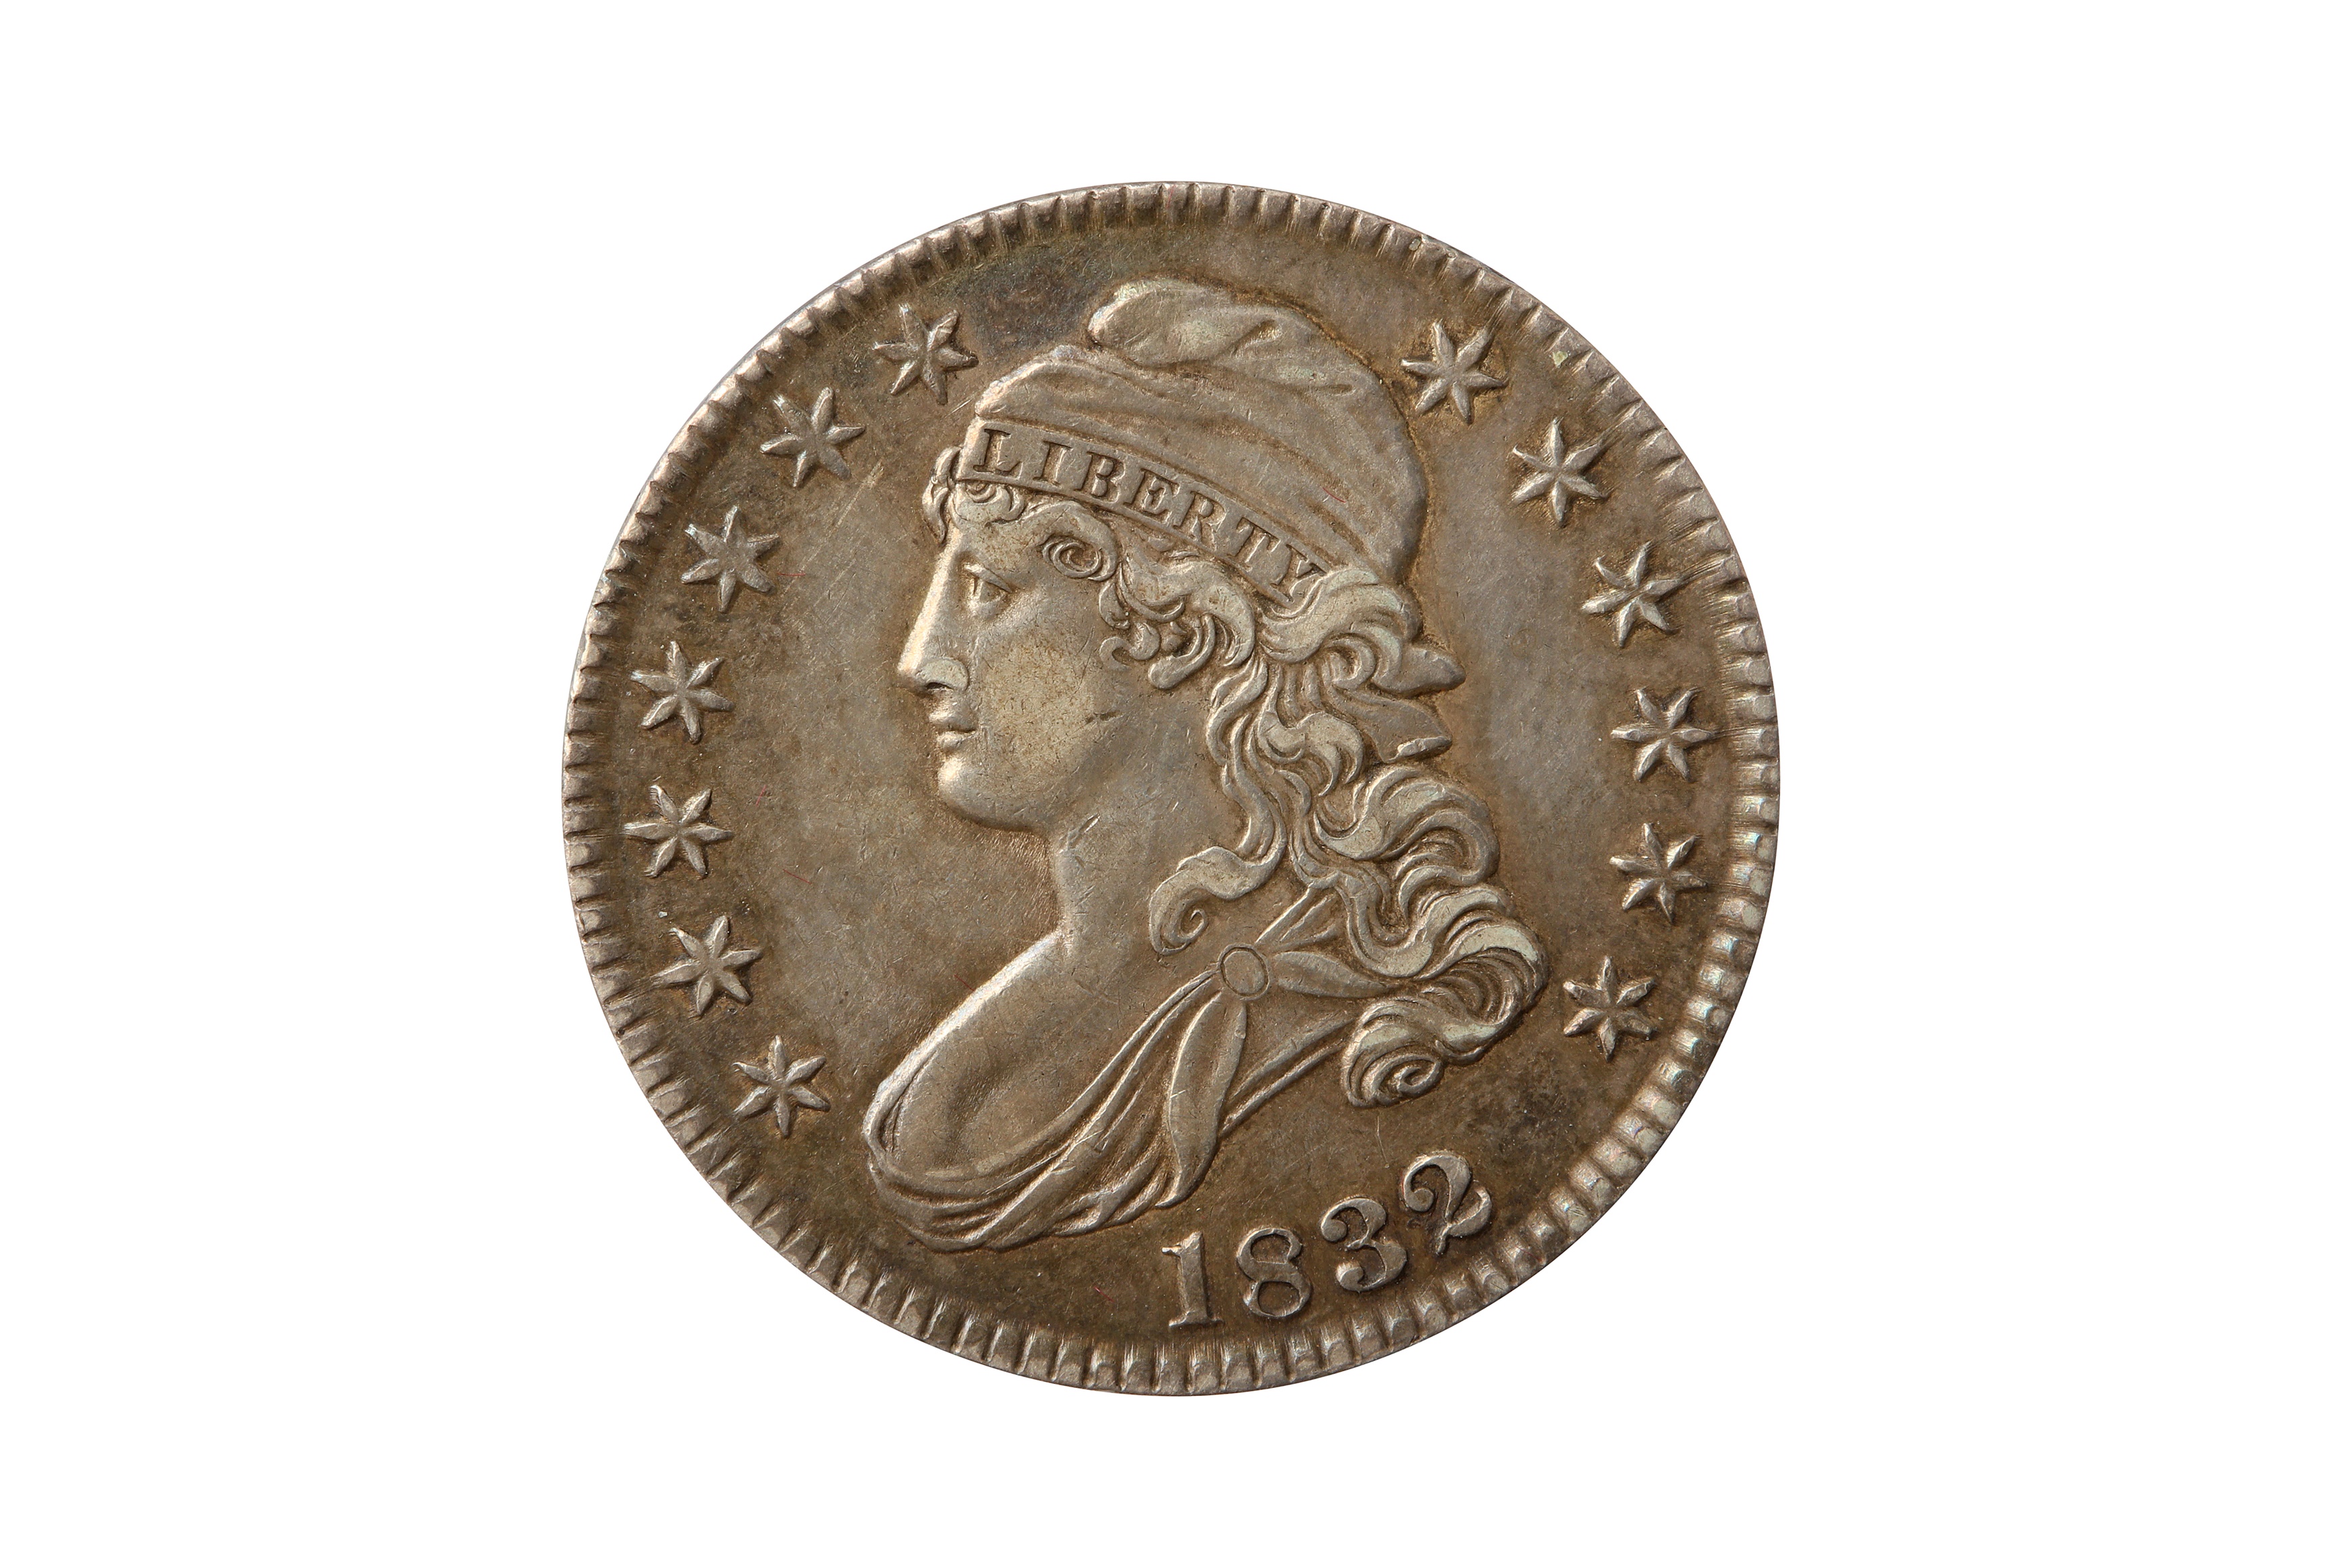 USA, 1832 50 CENTS/HALF DOLLAR.